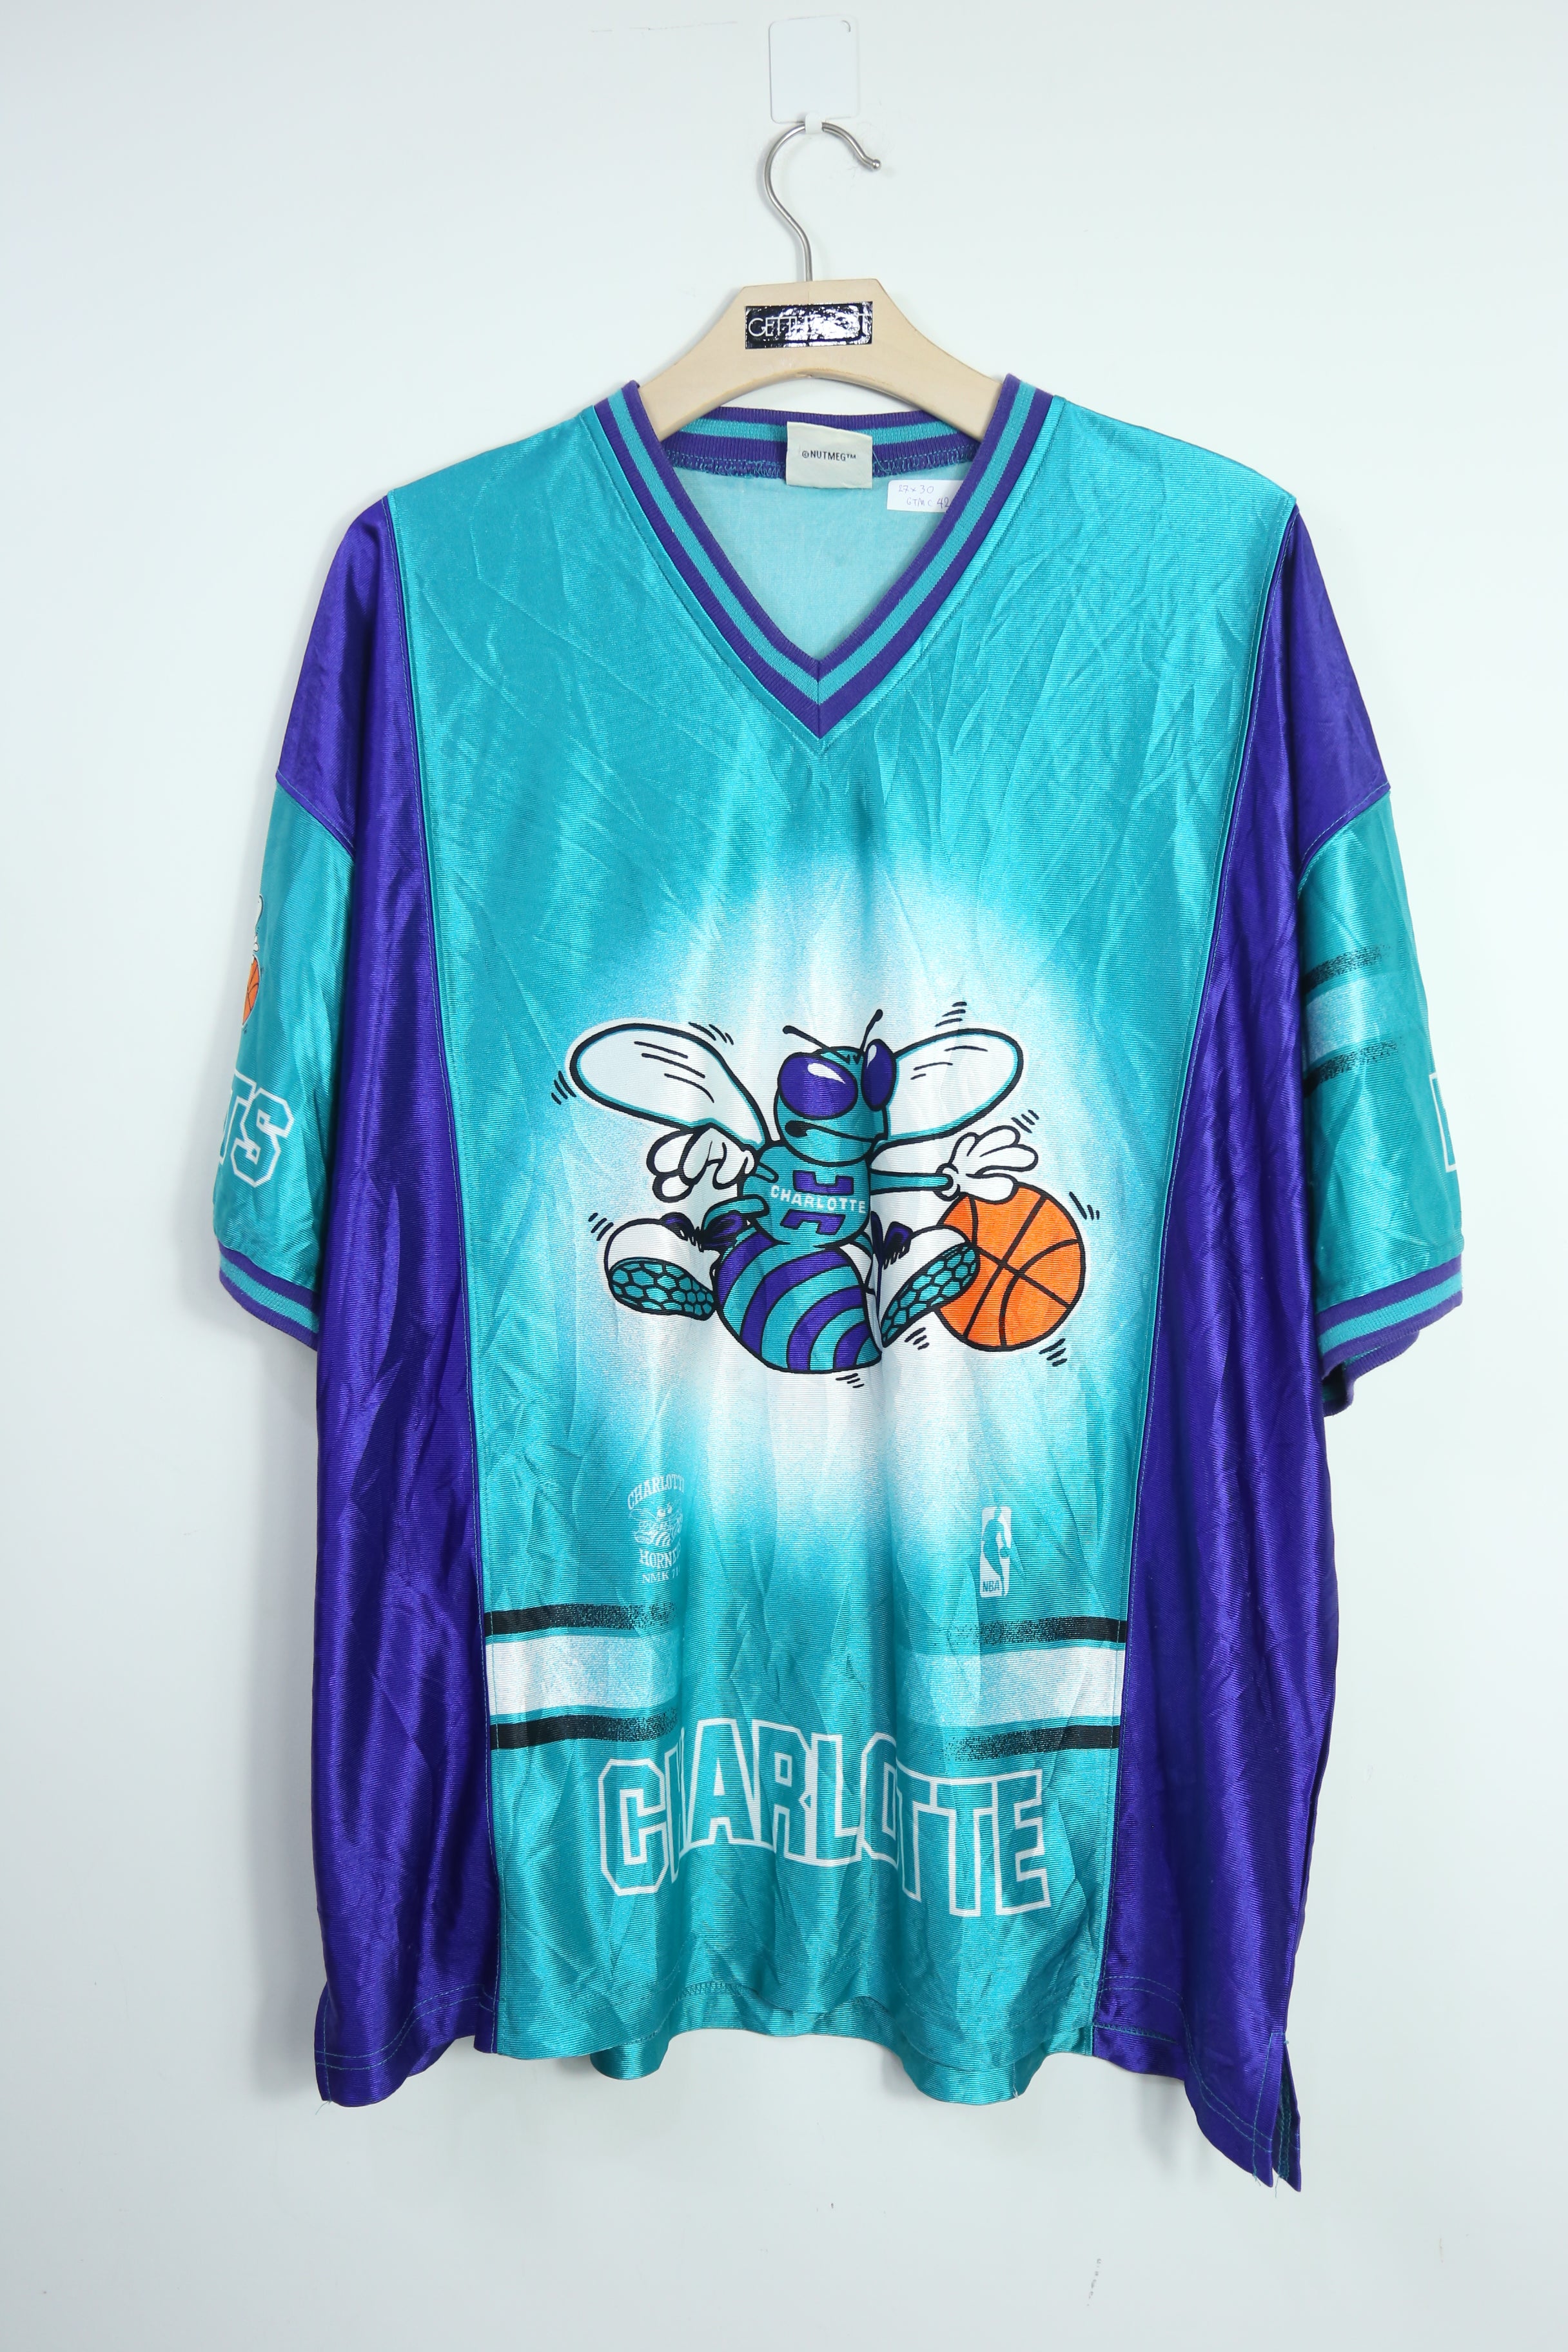 Charlotte Hornets Basketball T-Shirt - XL – The Vintage Store